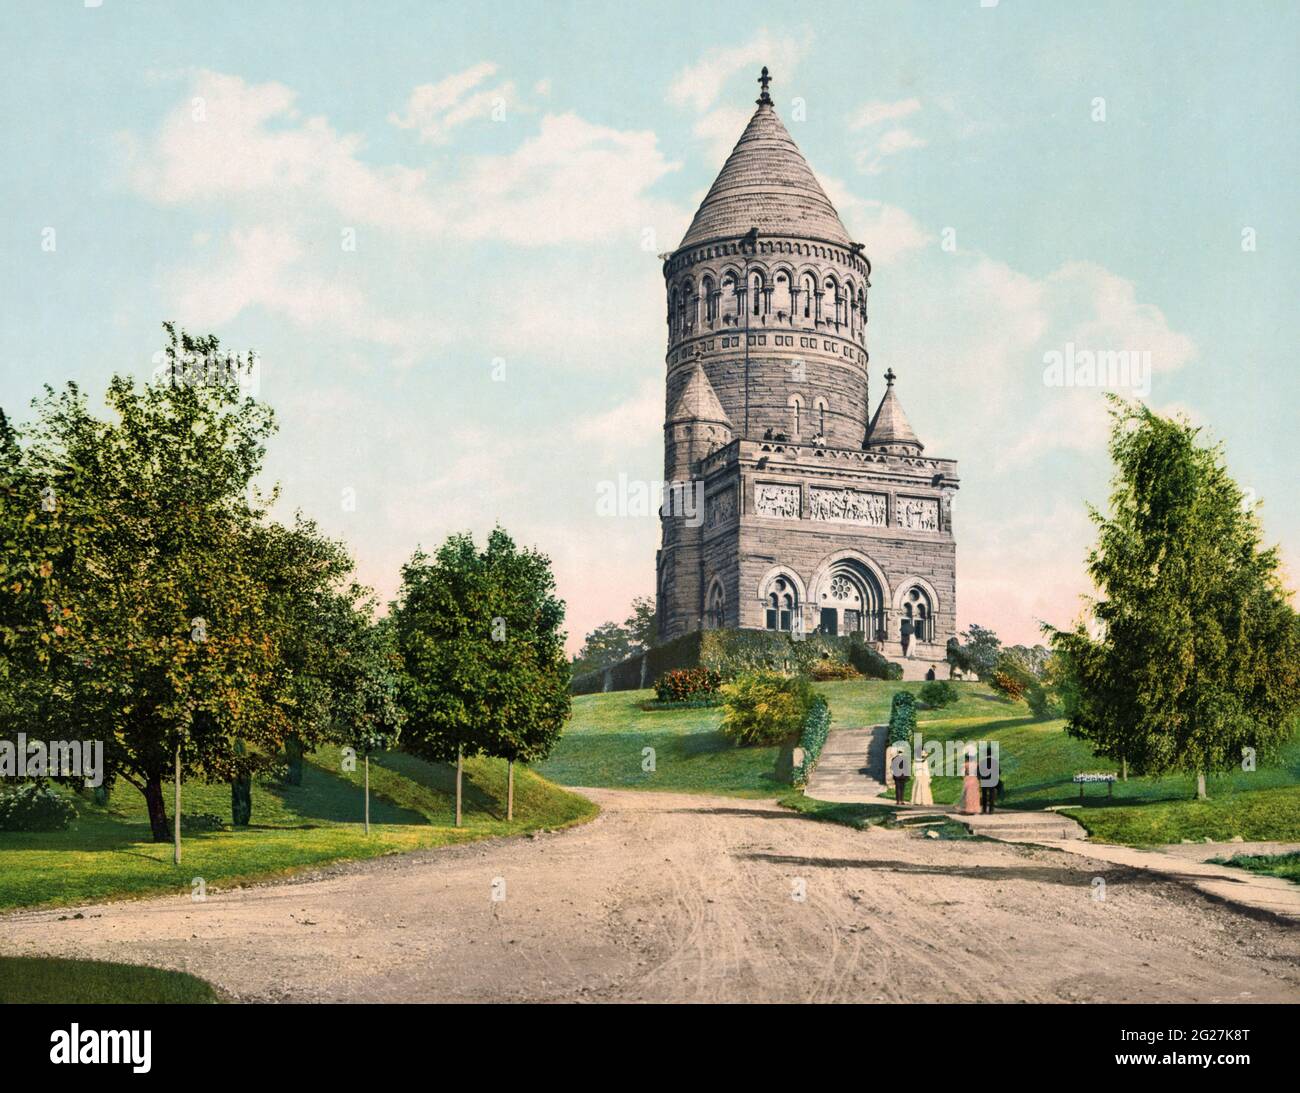 Photochrom print of the Garfield Memorial in Cleveland, Ohio, circa 1900. Stock Photo